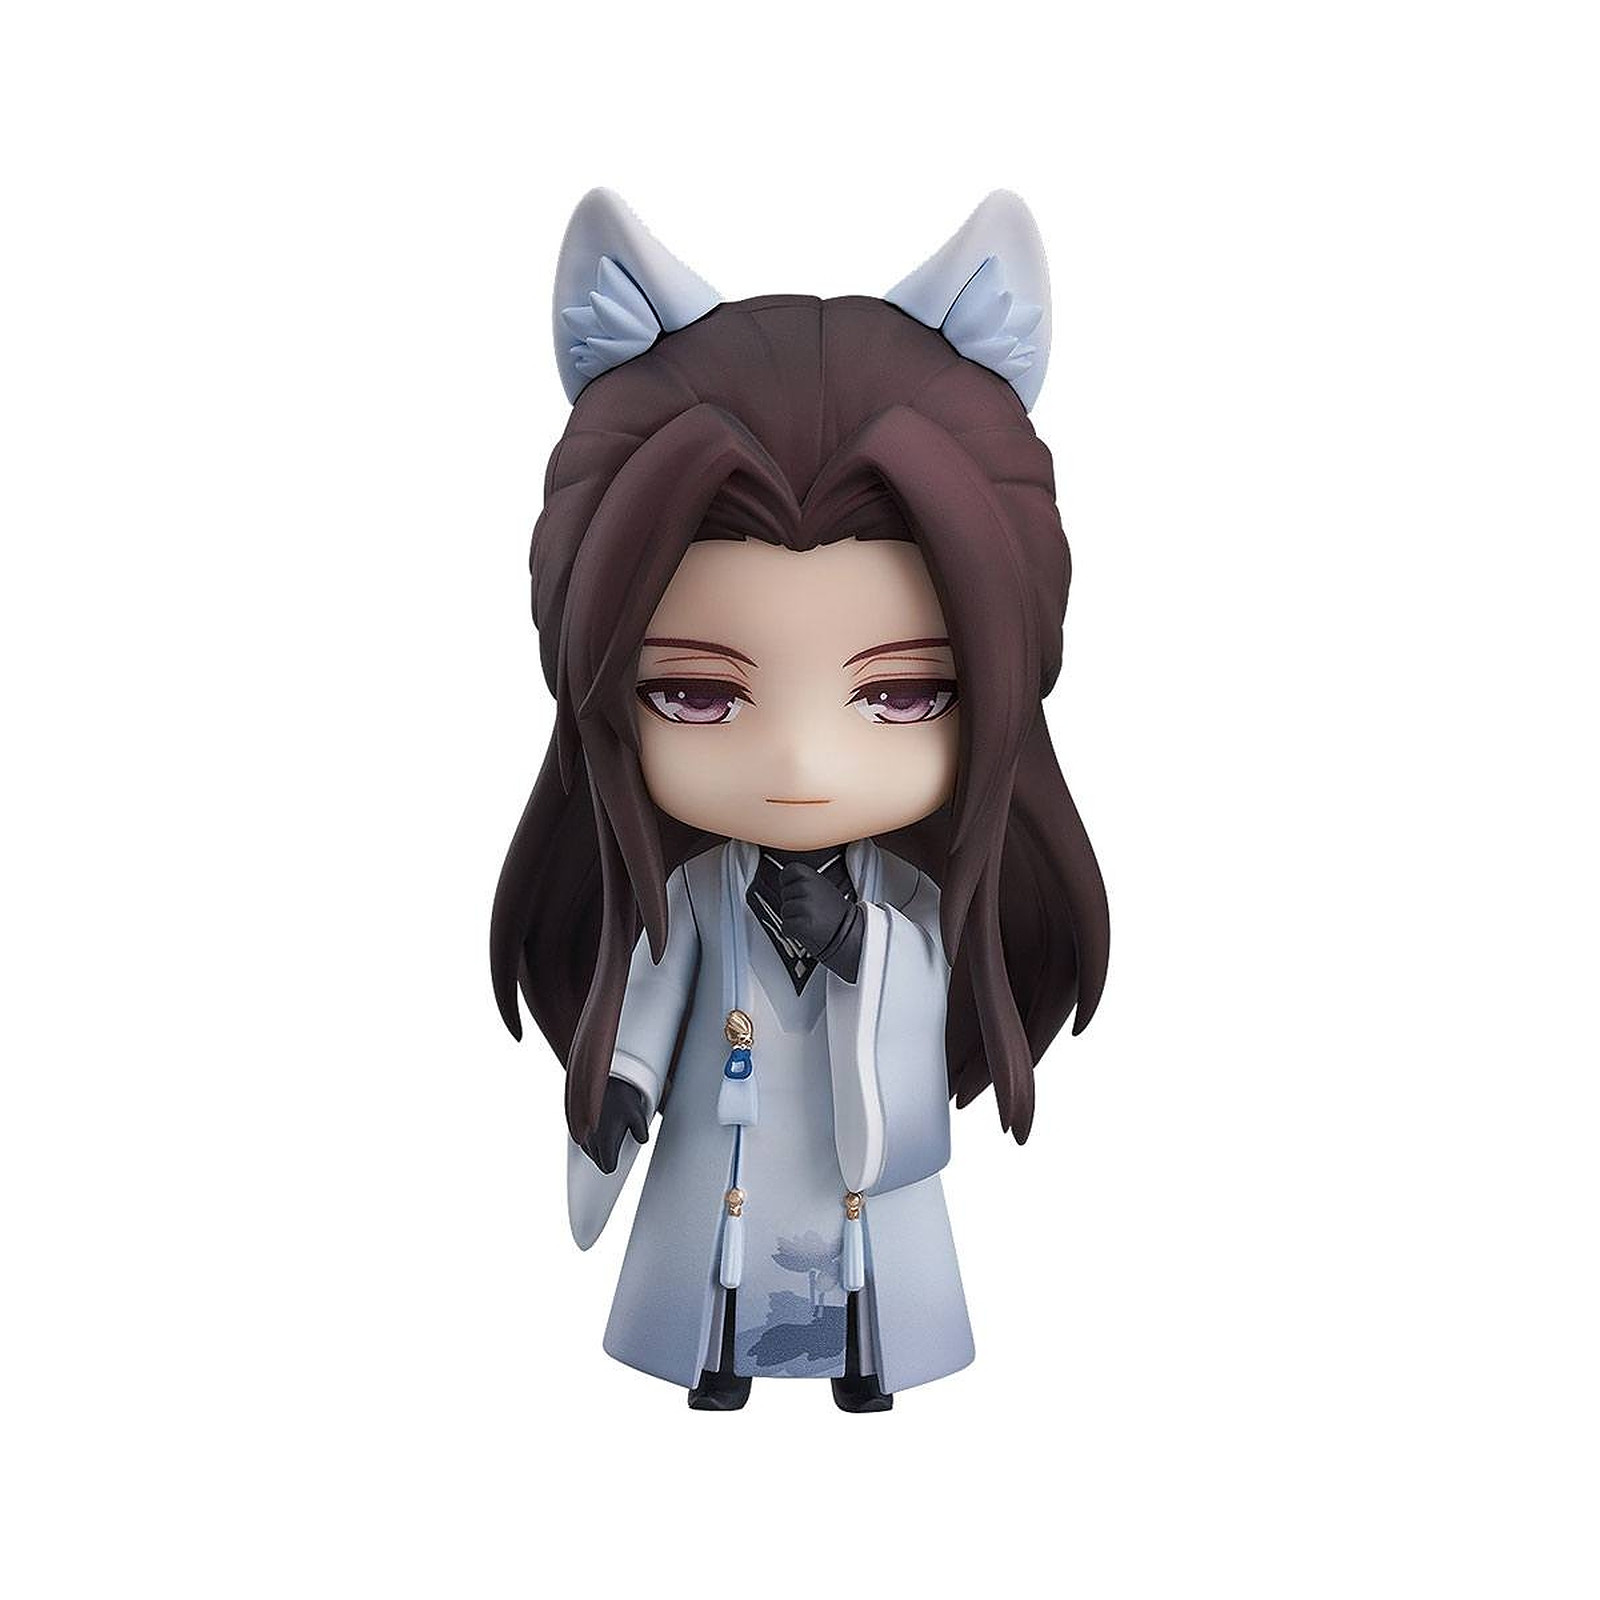 Love & Producer - Figurine Nendoroid Mo Xu: Fox Spirit Ver. 10 cm - Figurines Good Smile Company